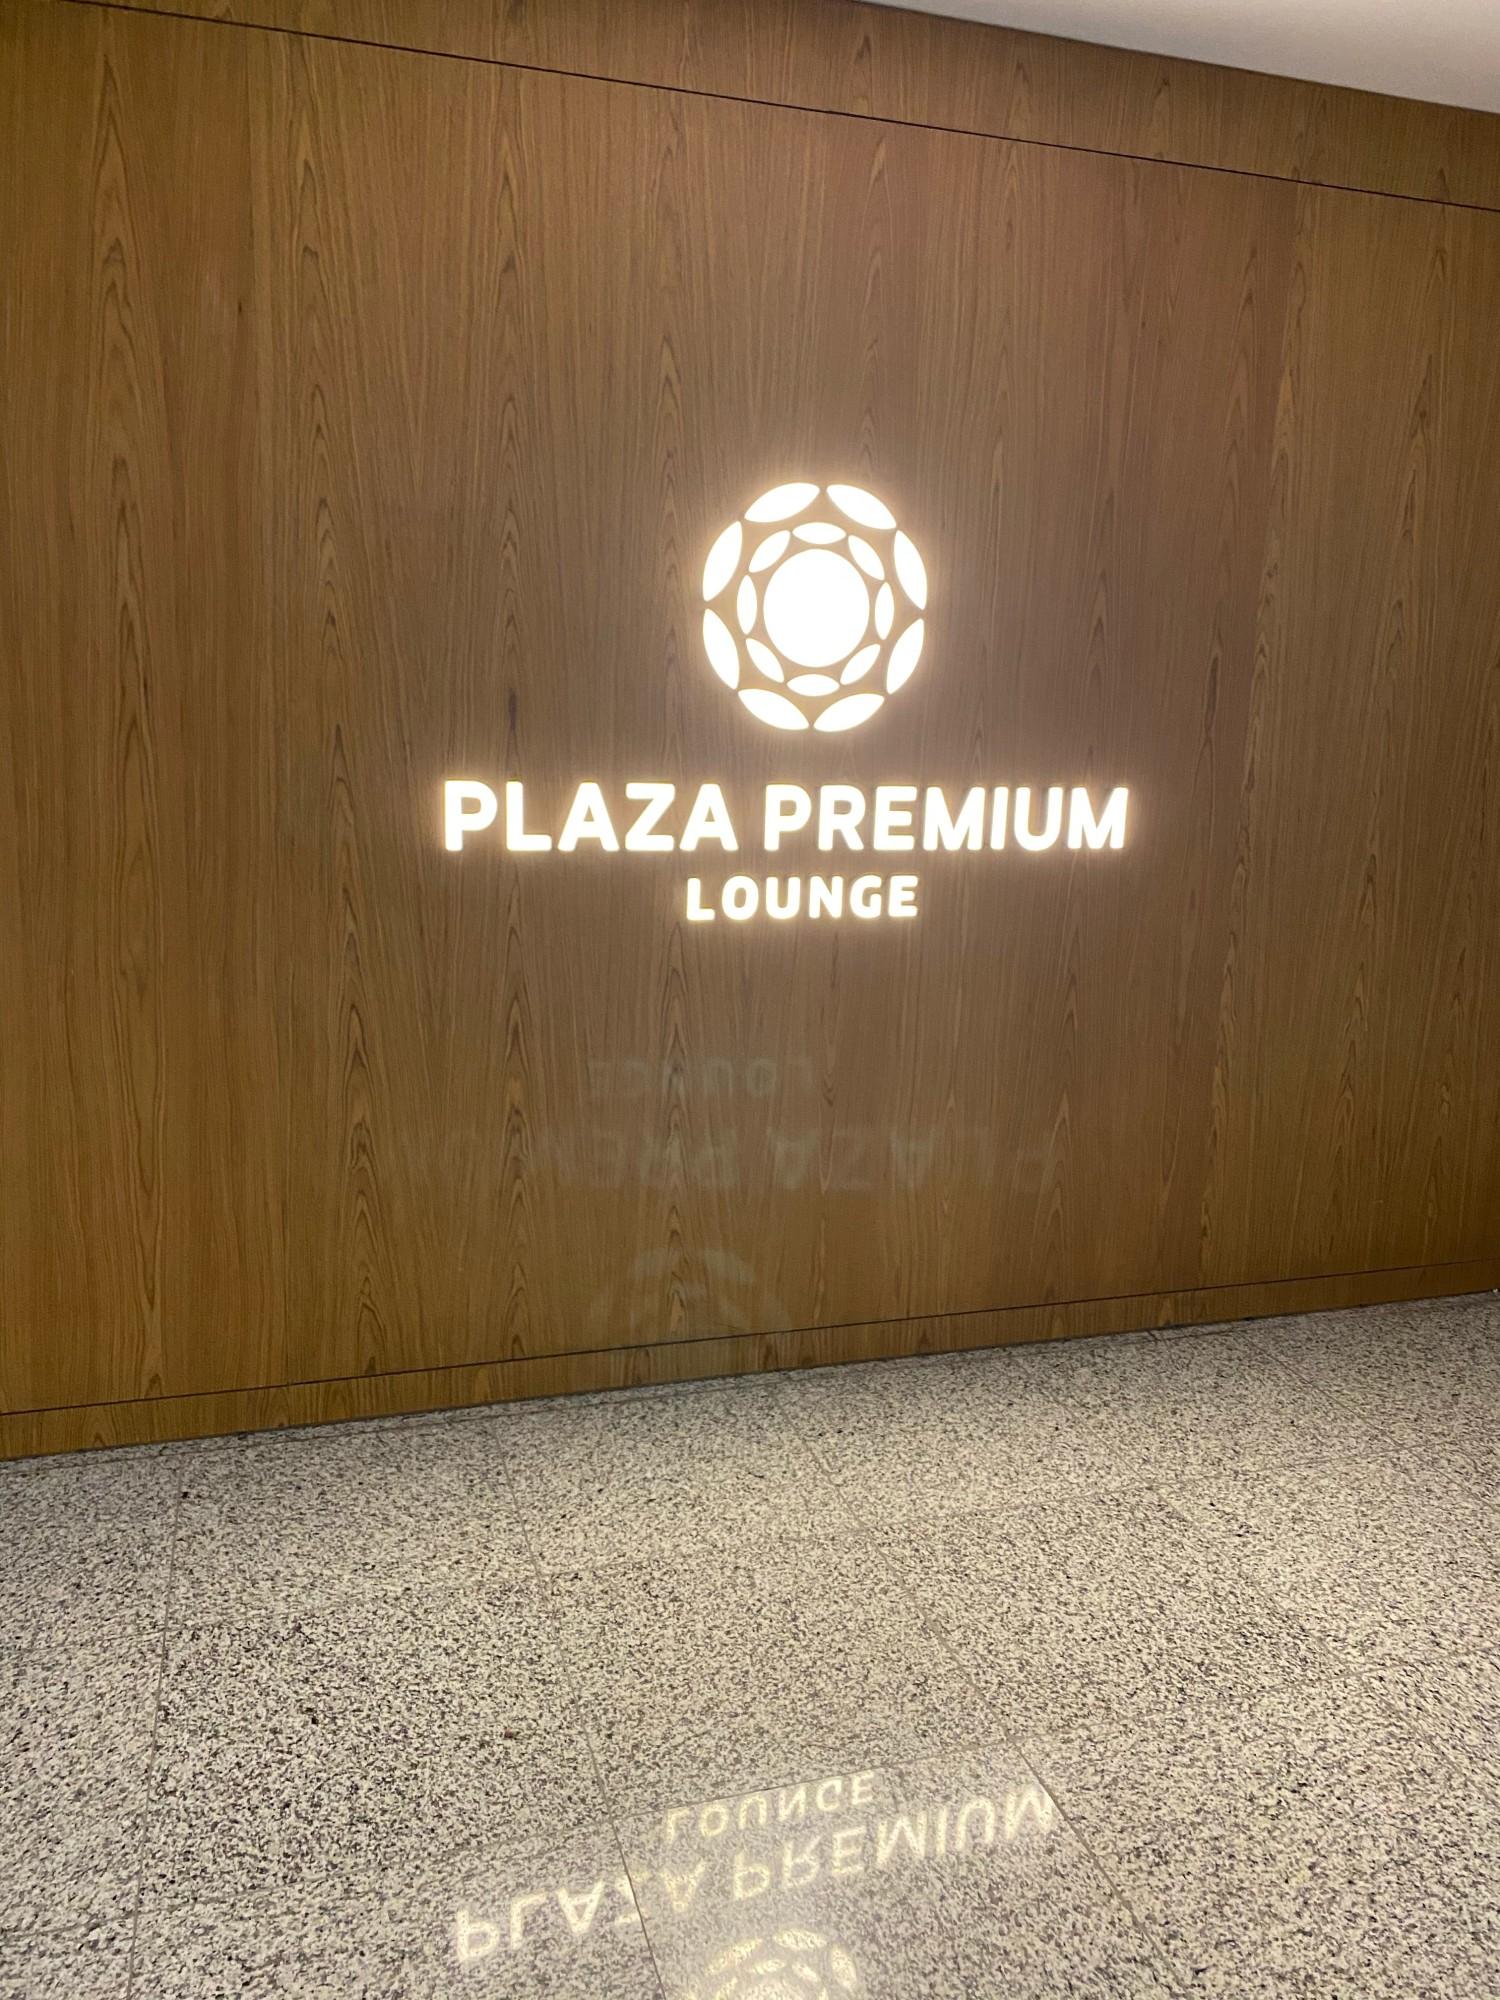 Plaza Premium Lounge (Domestic) image 30 of 38